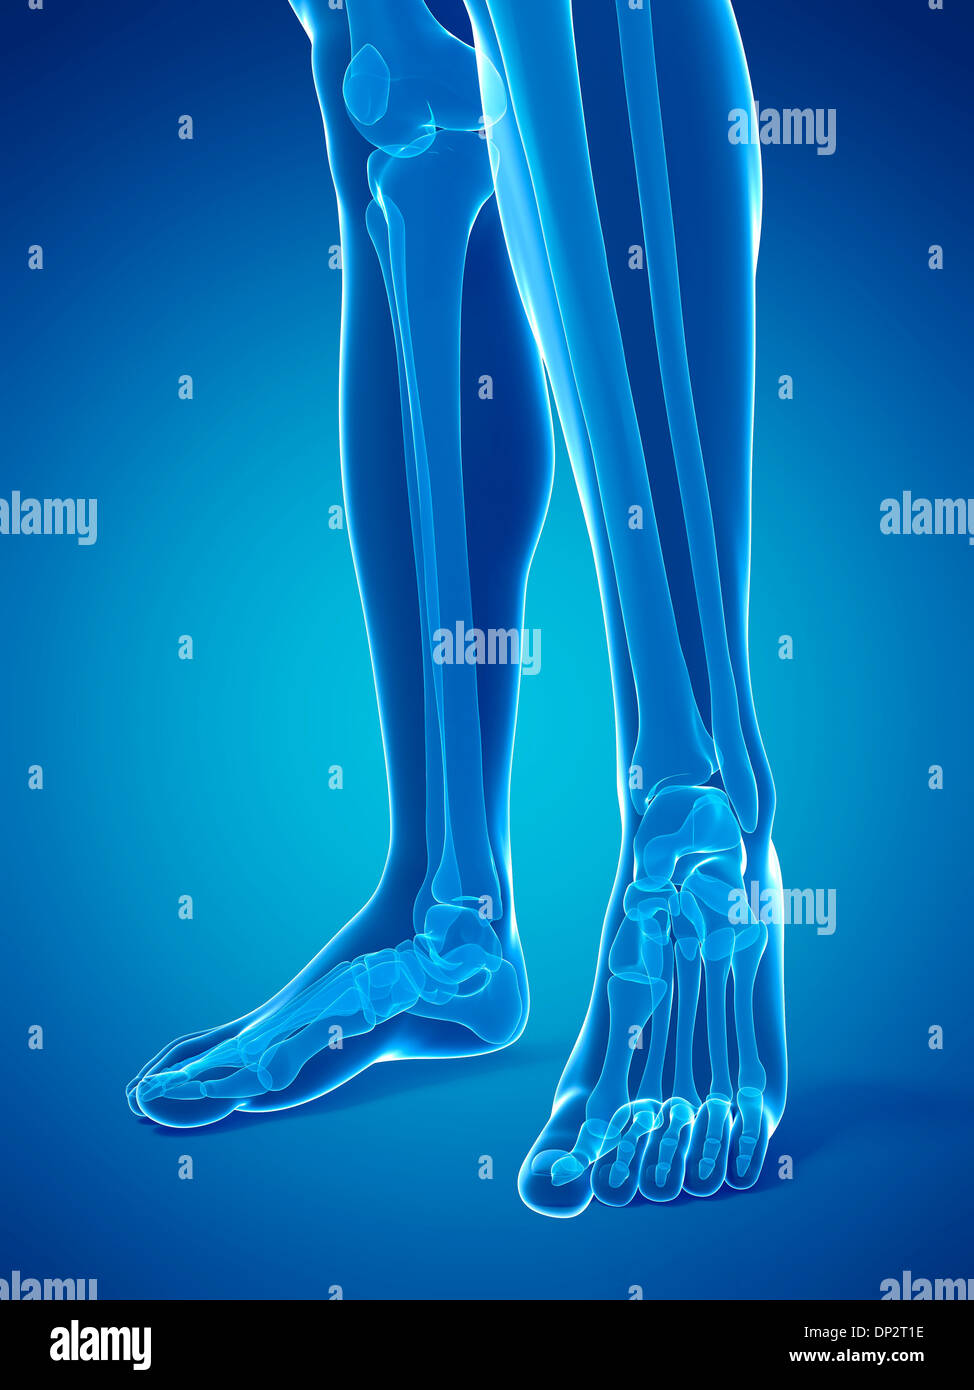 Bones of the lower legs and feet, artwork Stock Photo